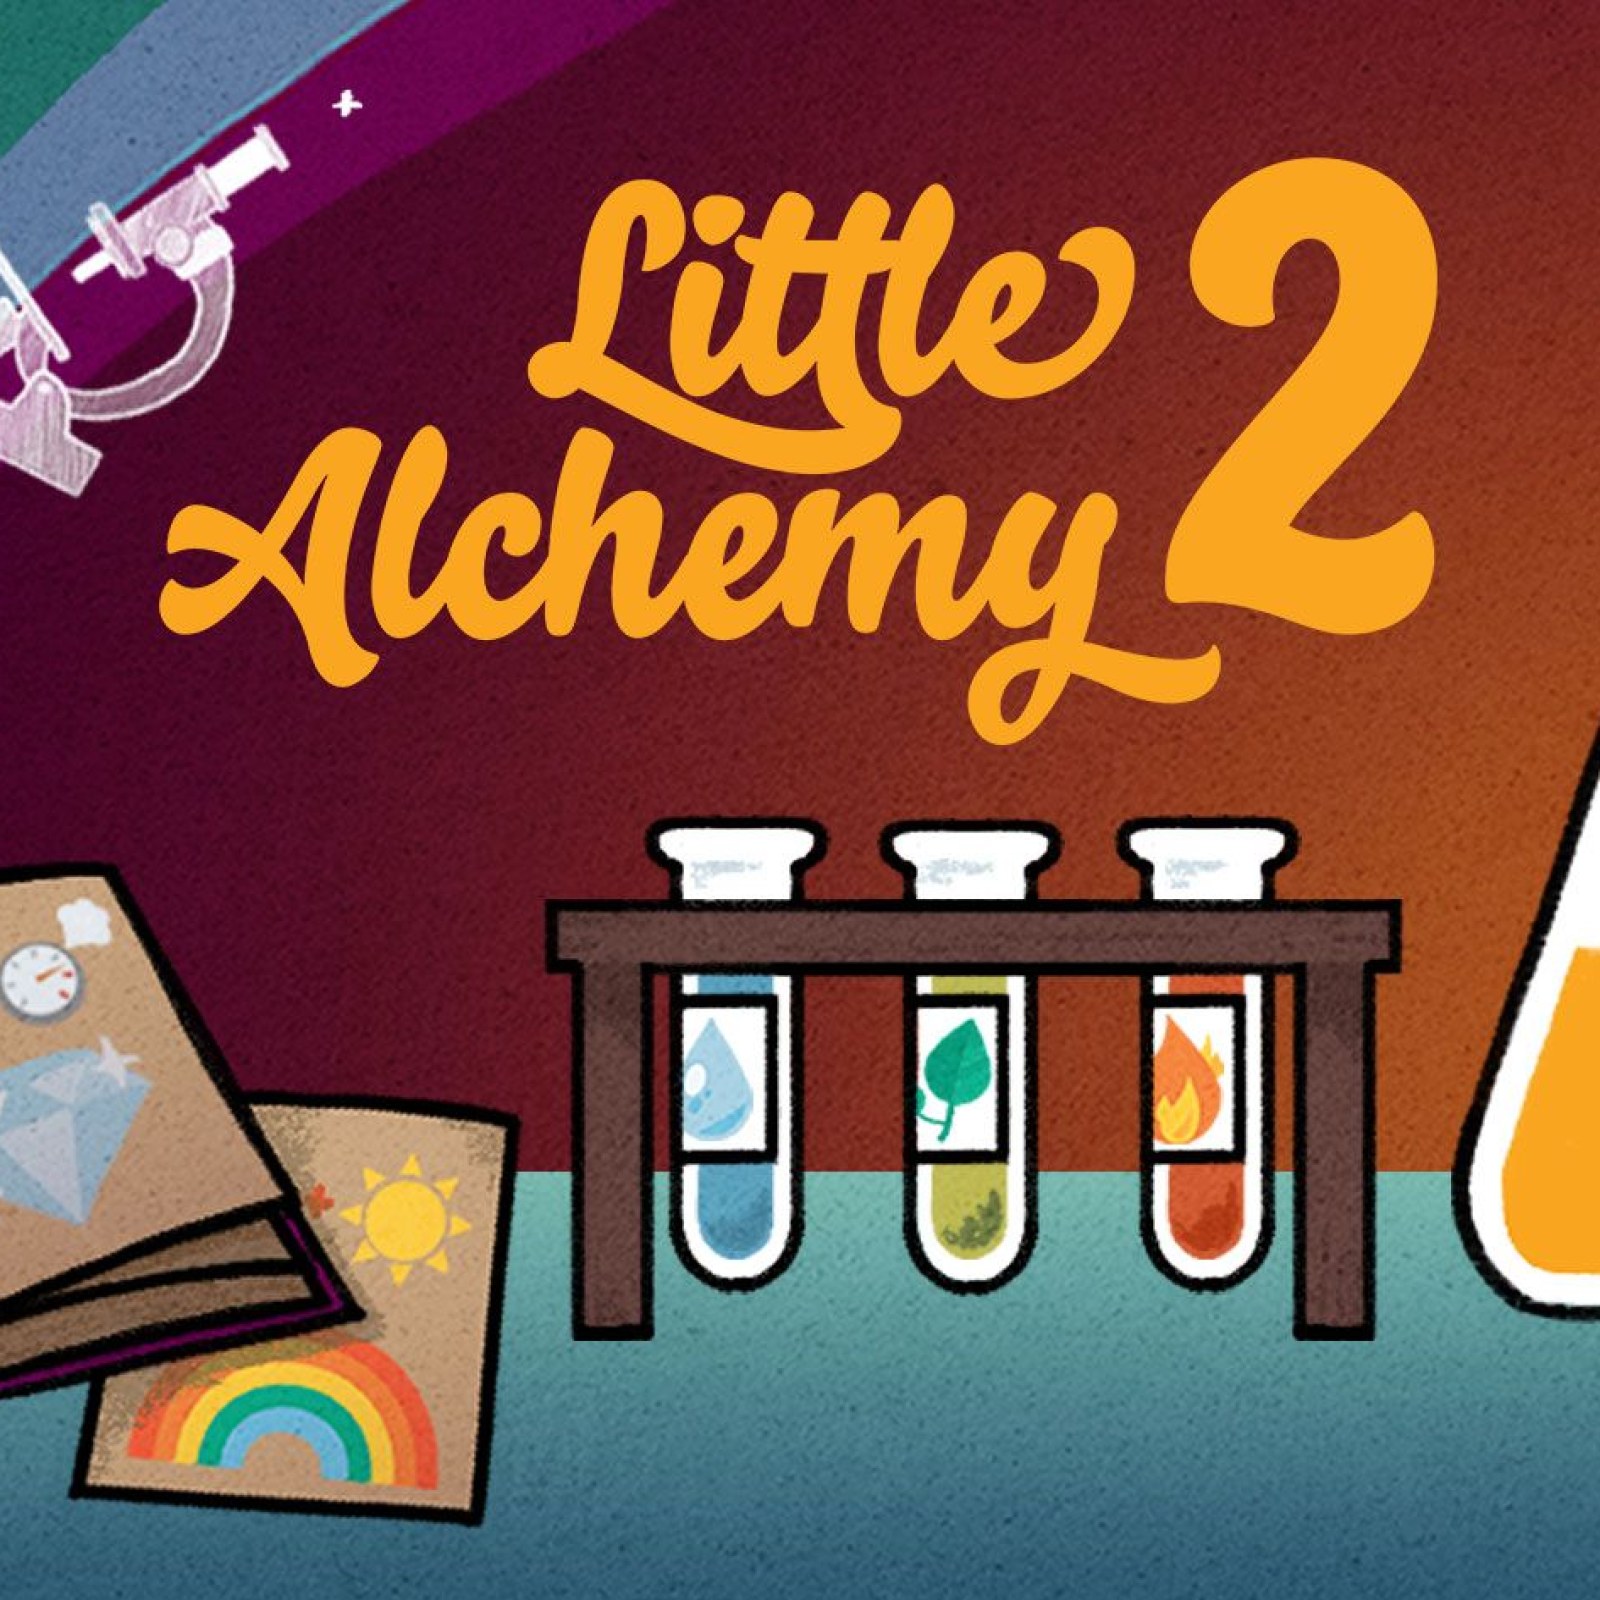 Dryad - Little Alchemy 2 Cheats